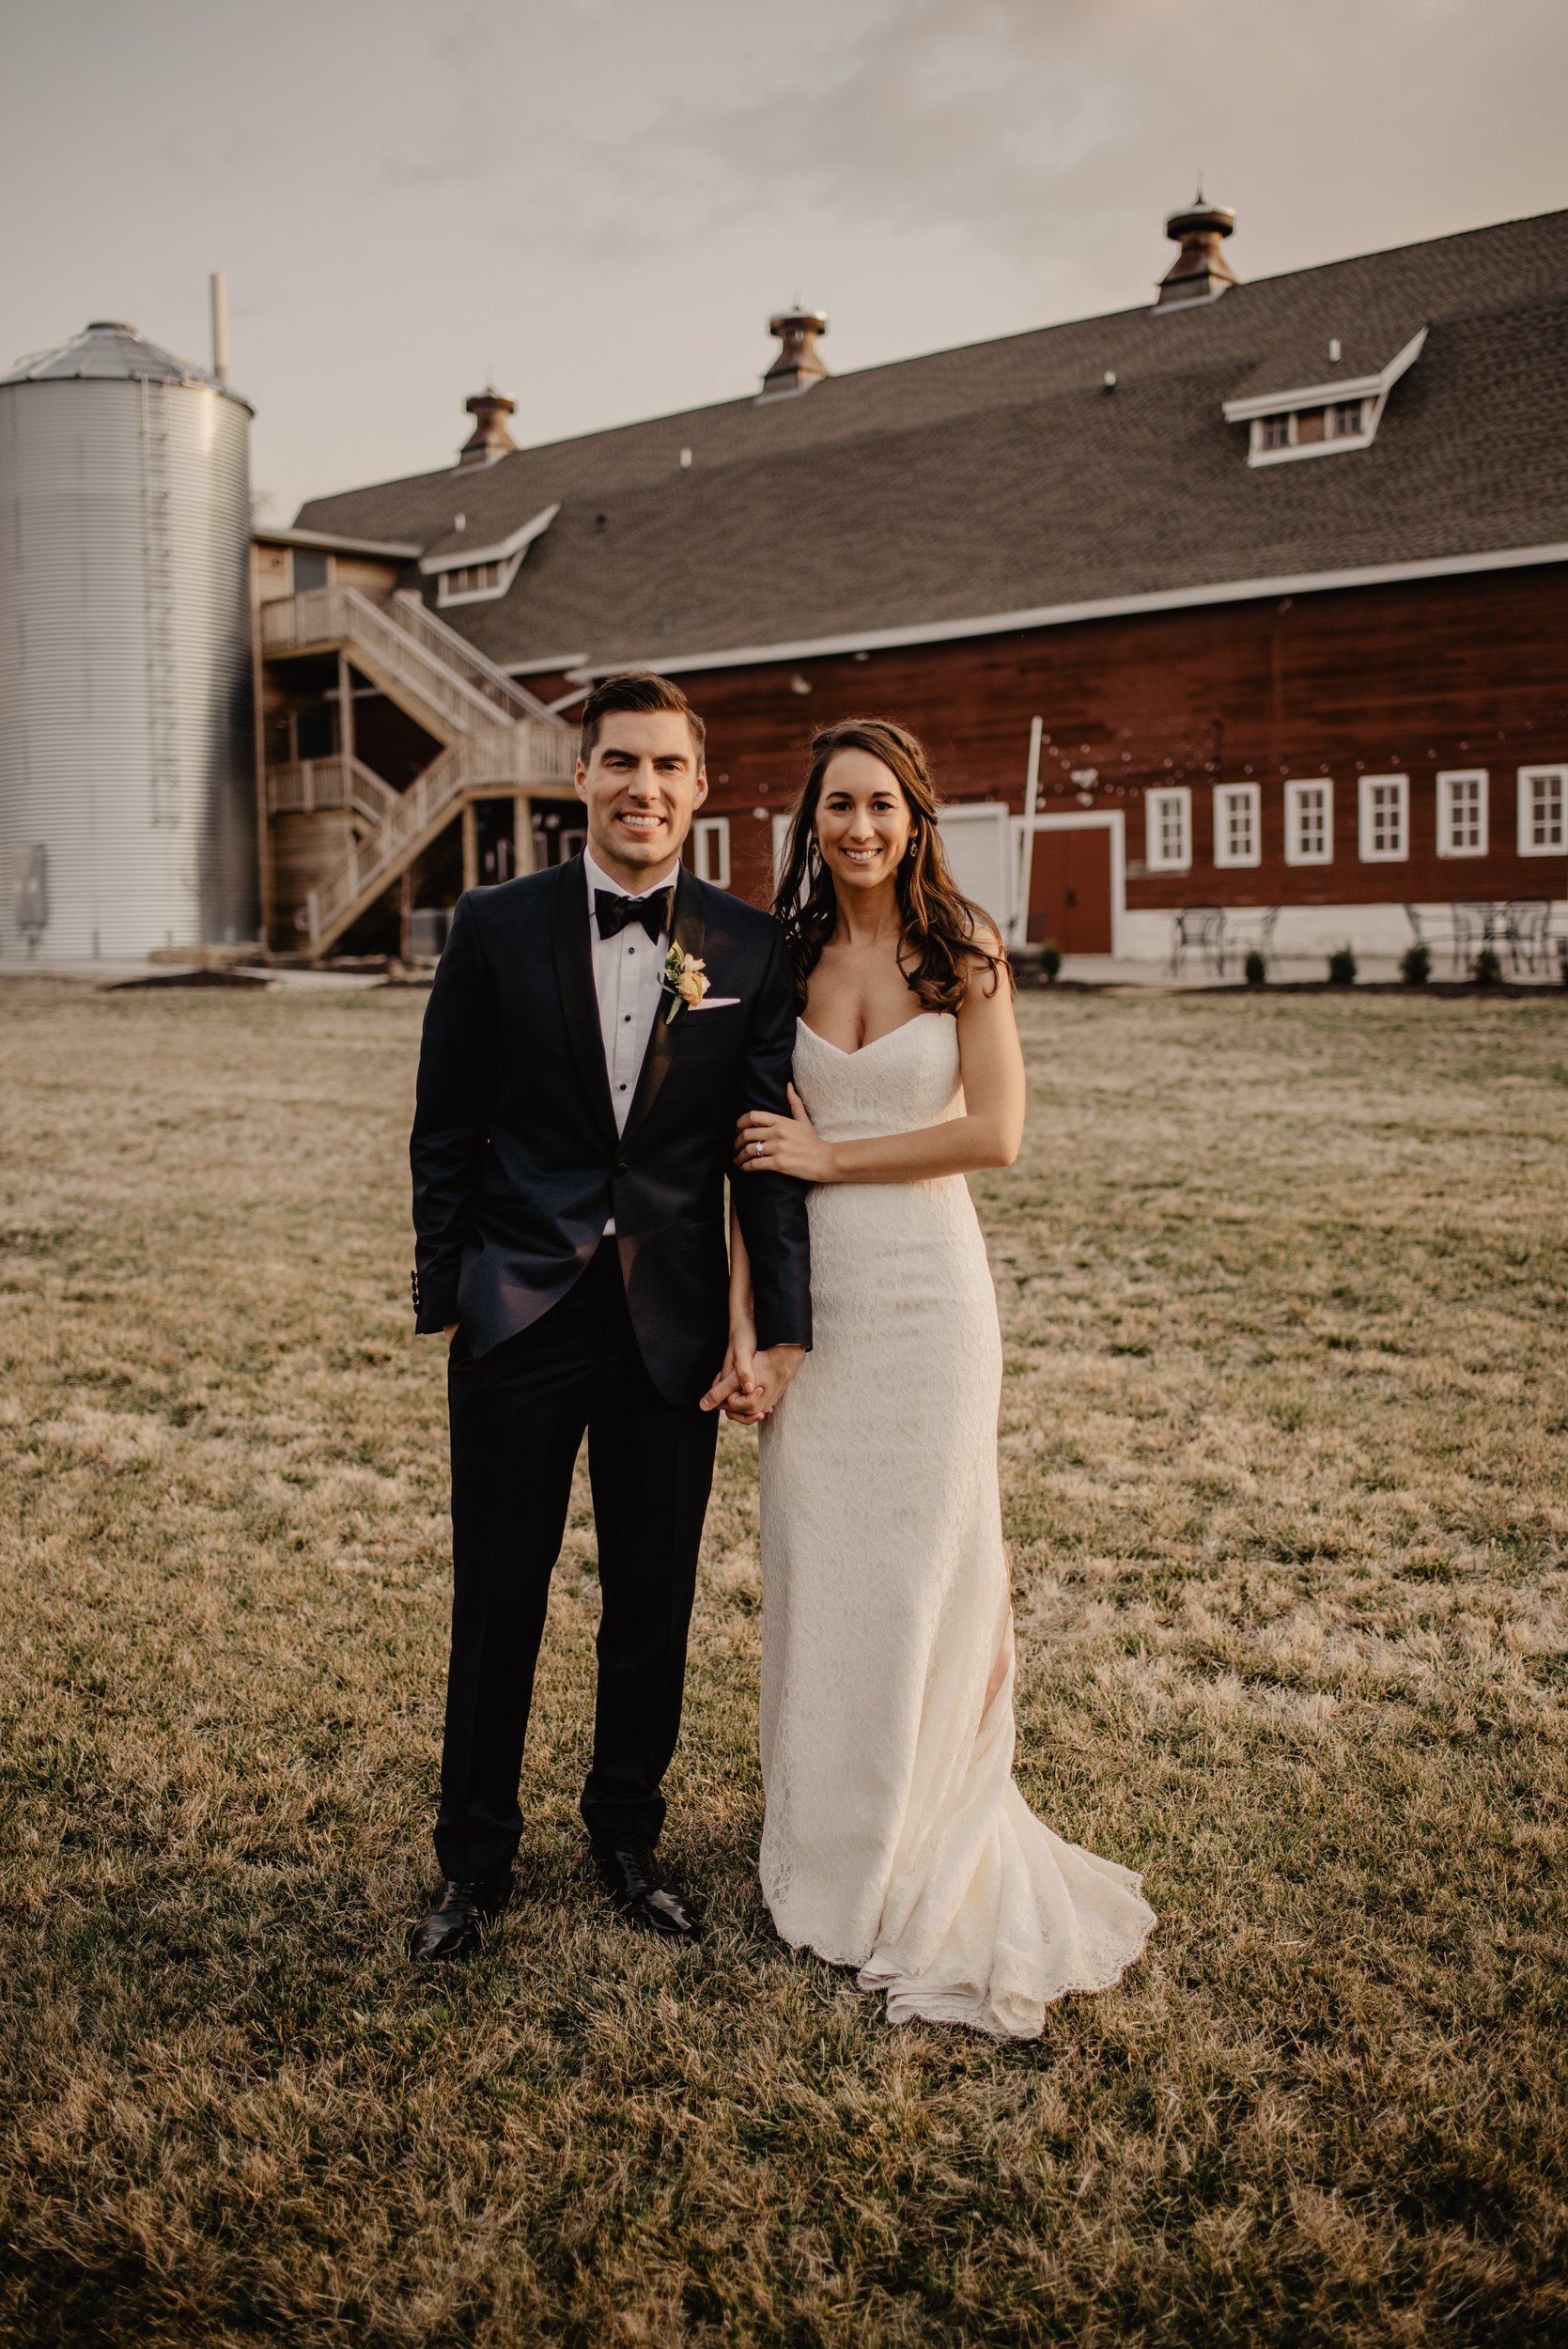 The Barn at the Ackerhurst Dairy Farm Omaha Nebraska Wedding Kaylie Sirek Photography093.jpg